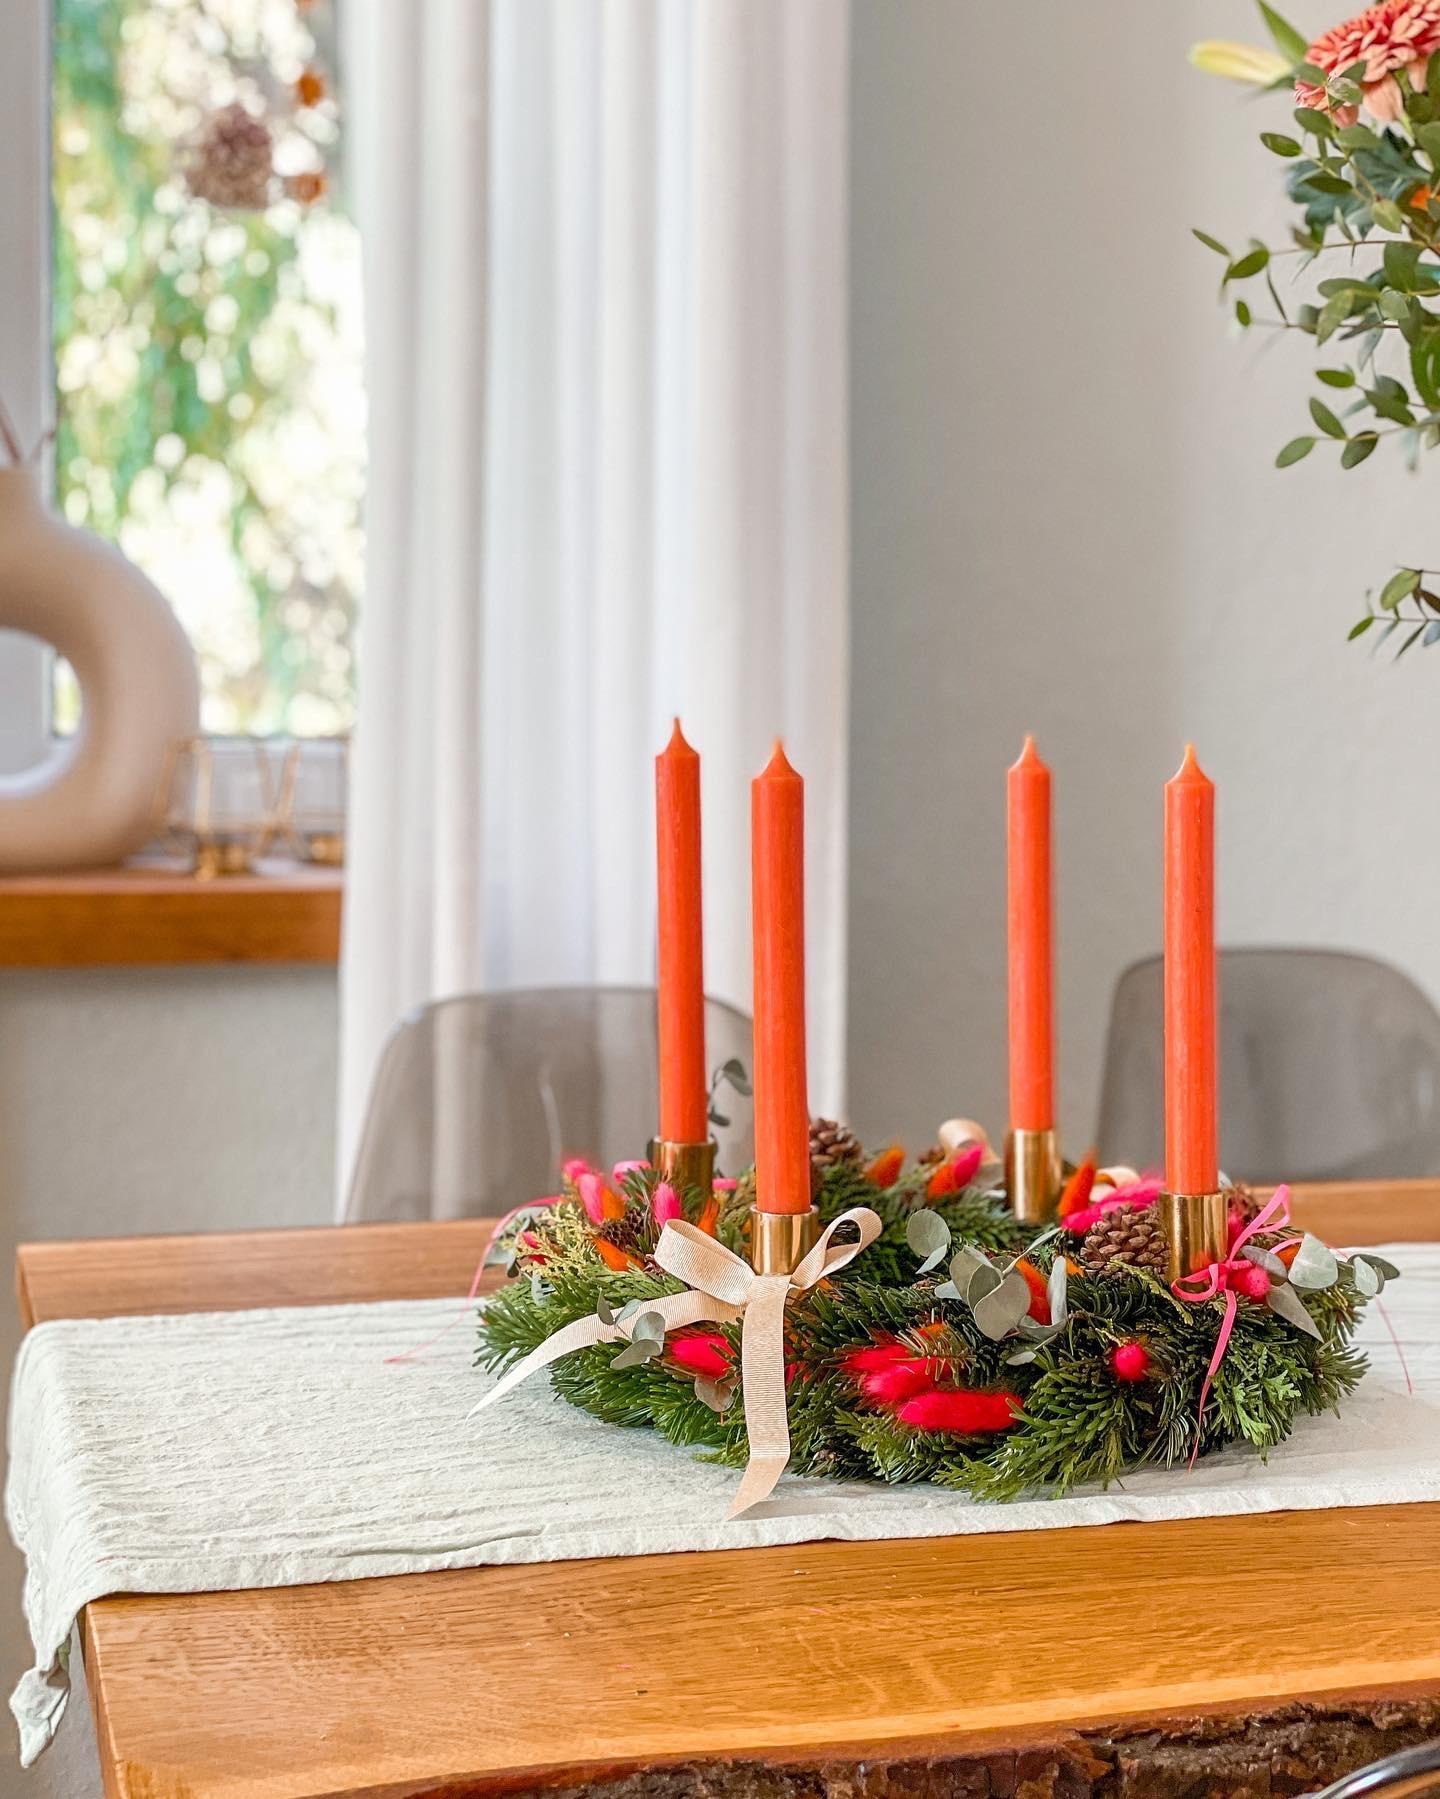 #adventskranz #diy #christmasdecor #adventwreath #candles #wintertime #decoration #advent